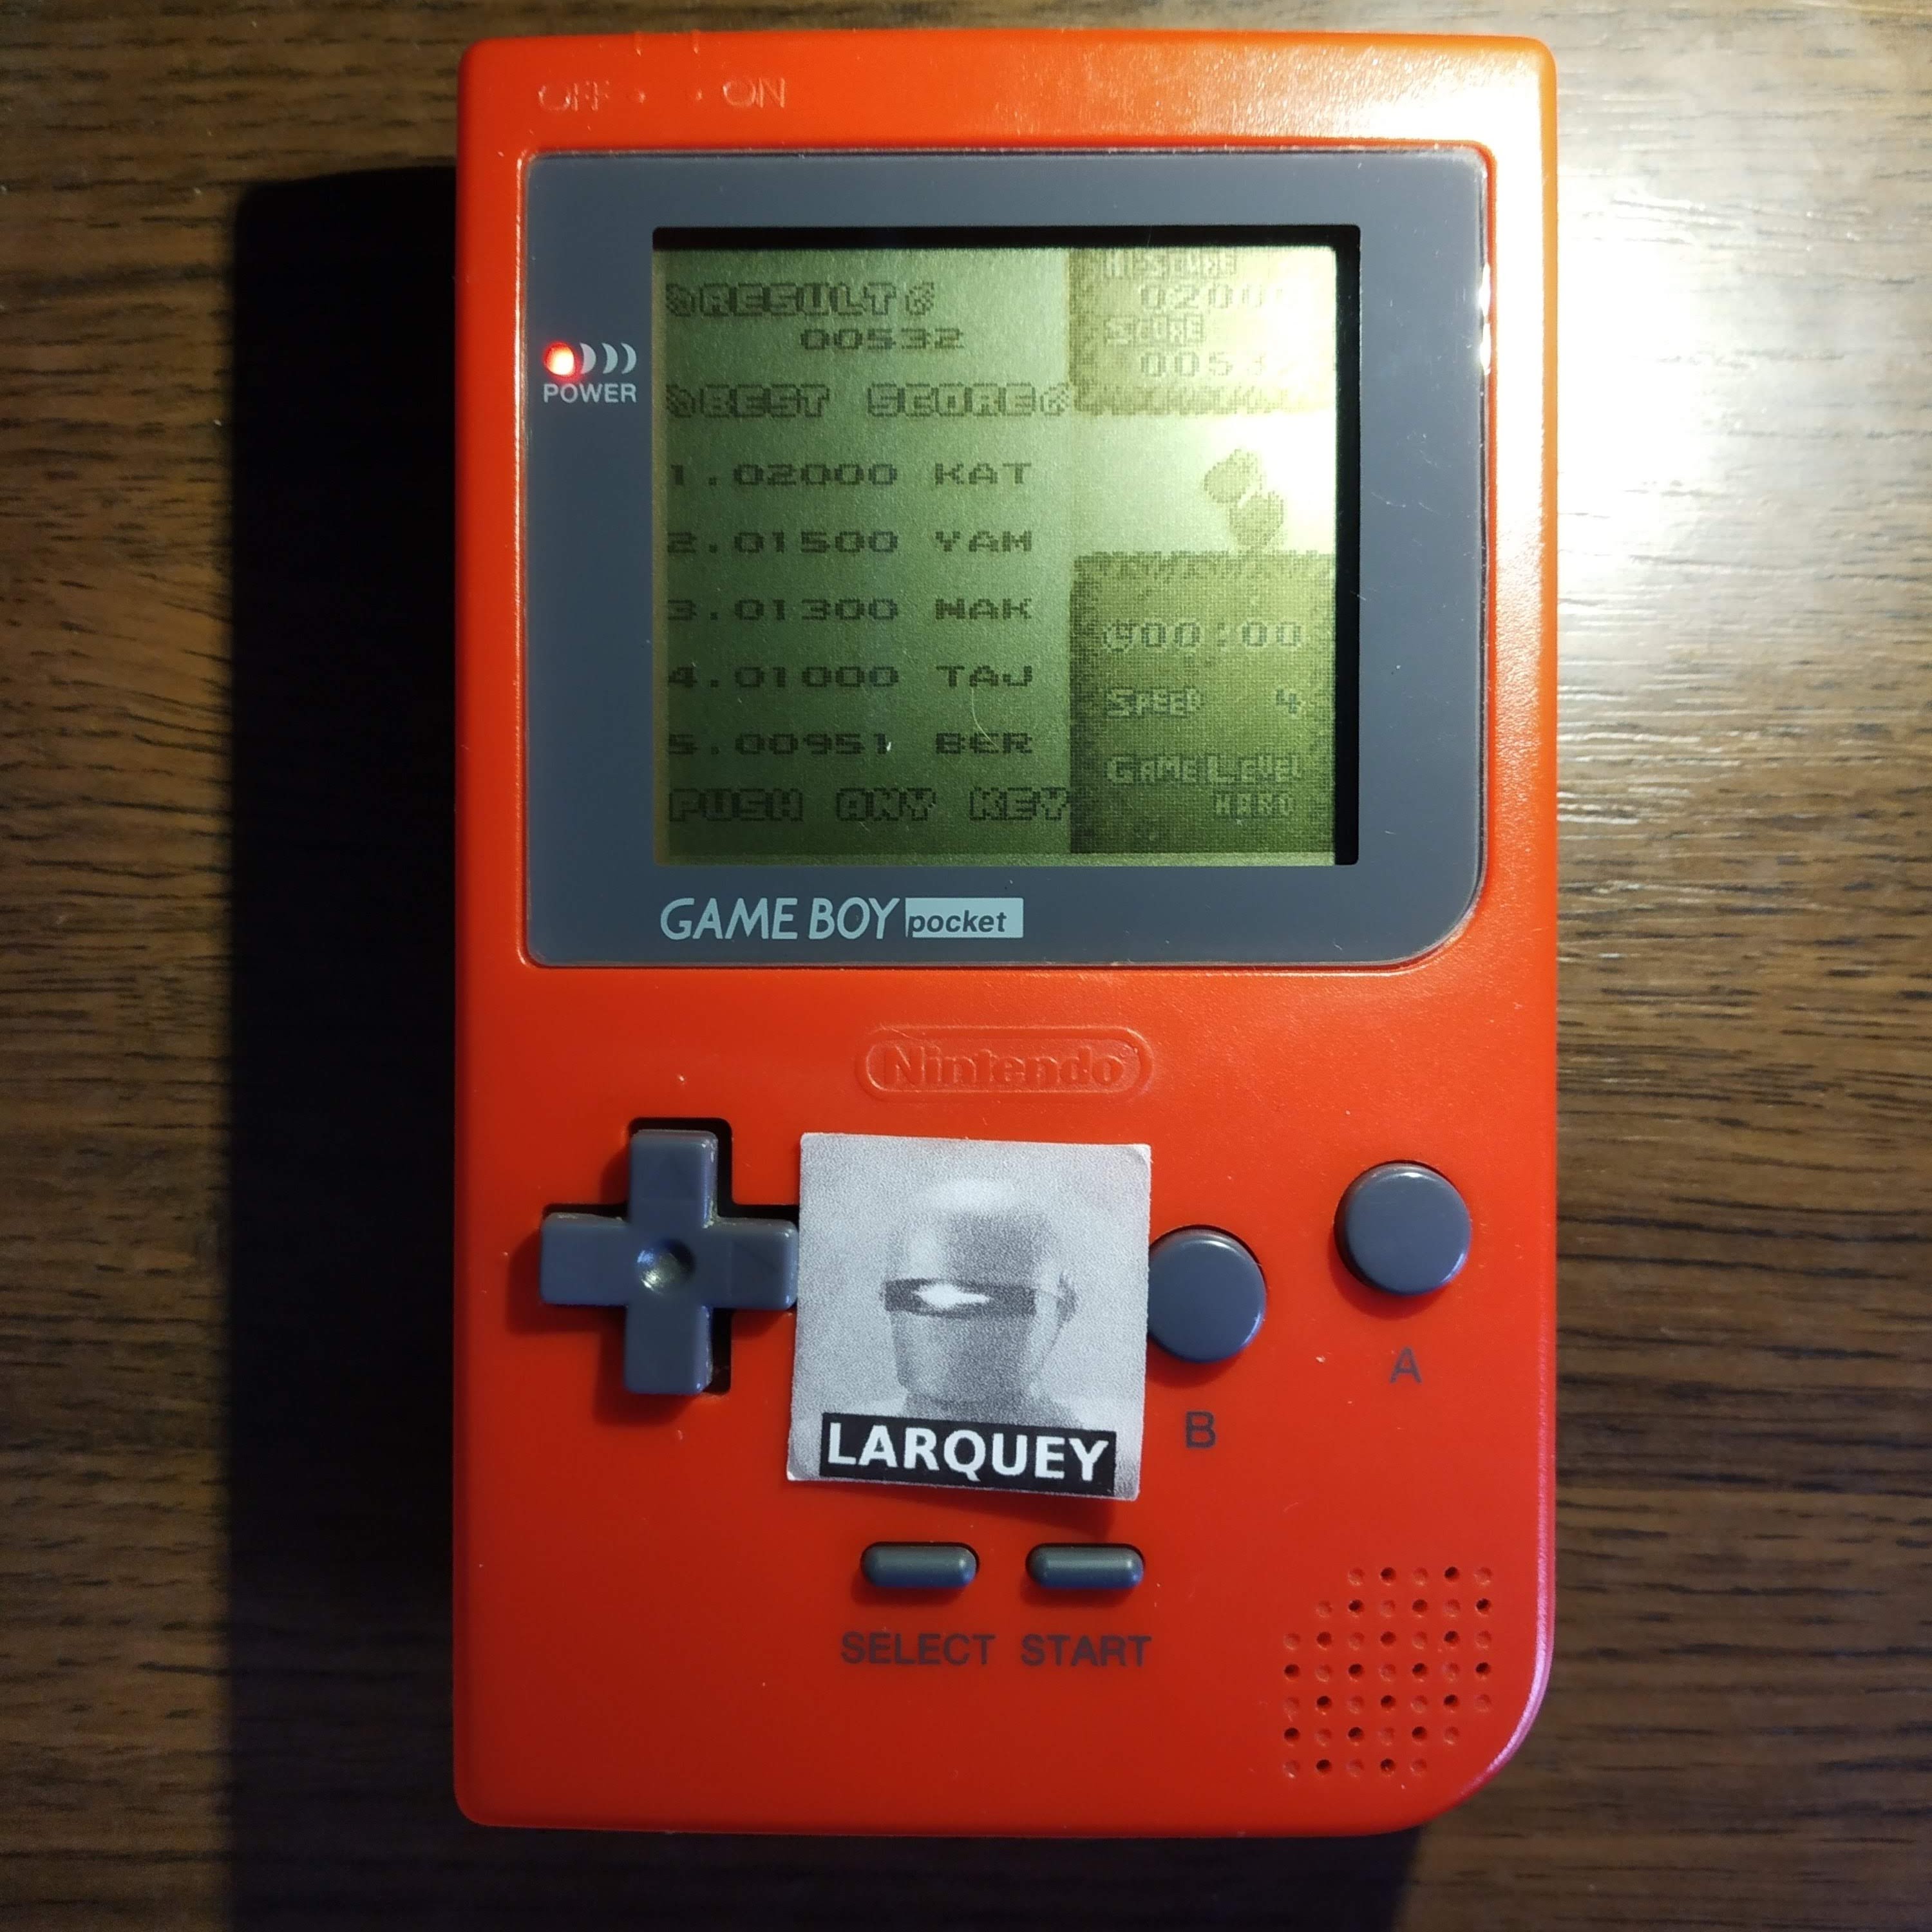 Larquey: Tetris Attack: Time Trial [Hard] (Game Boy) 532 points on 2020-05-16 08:06:51